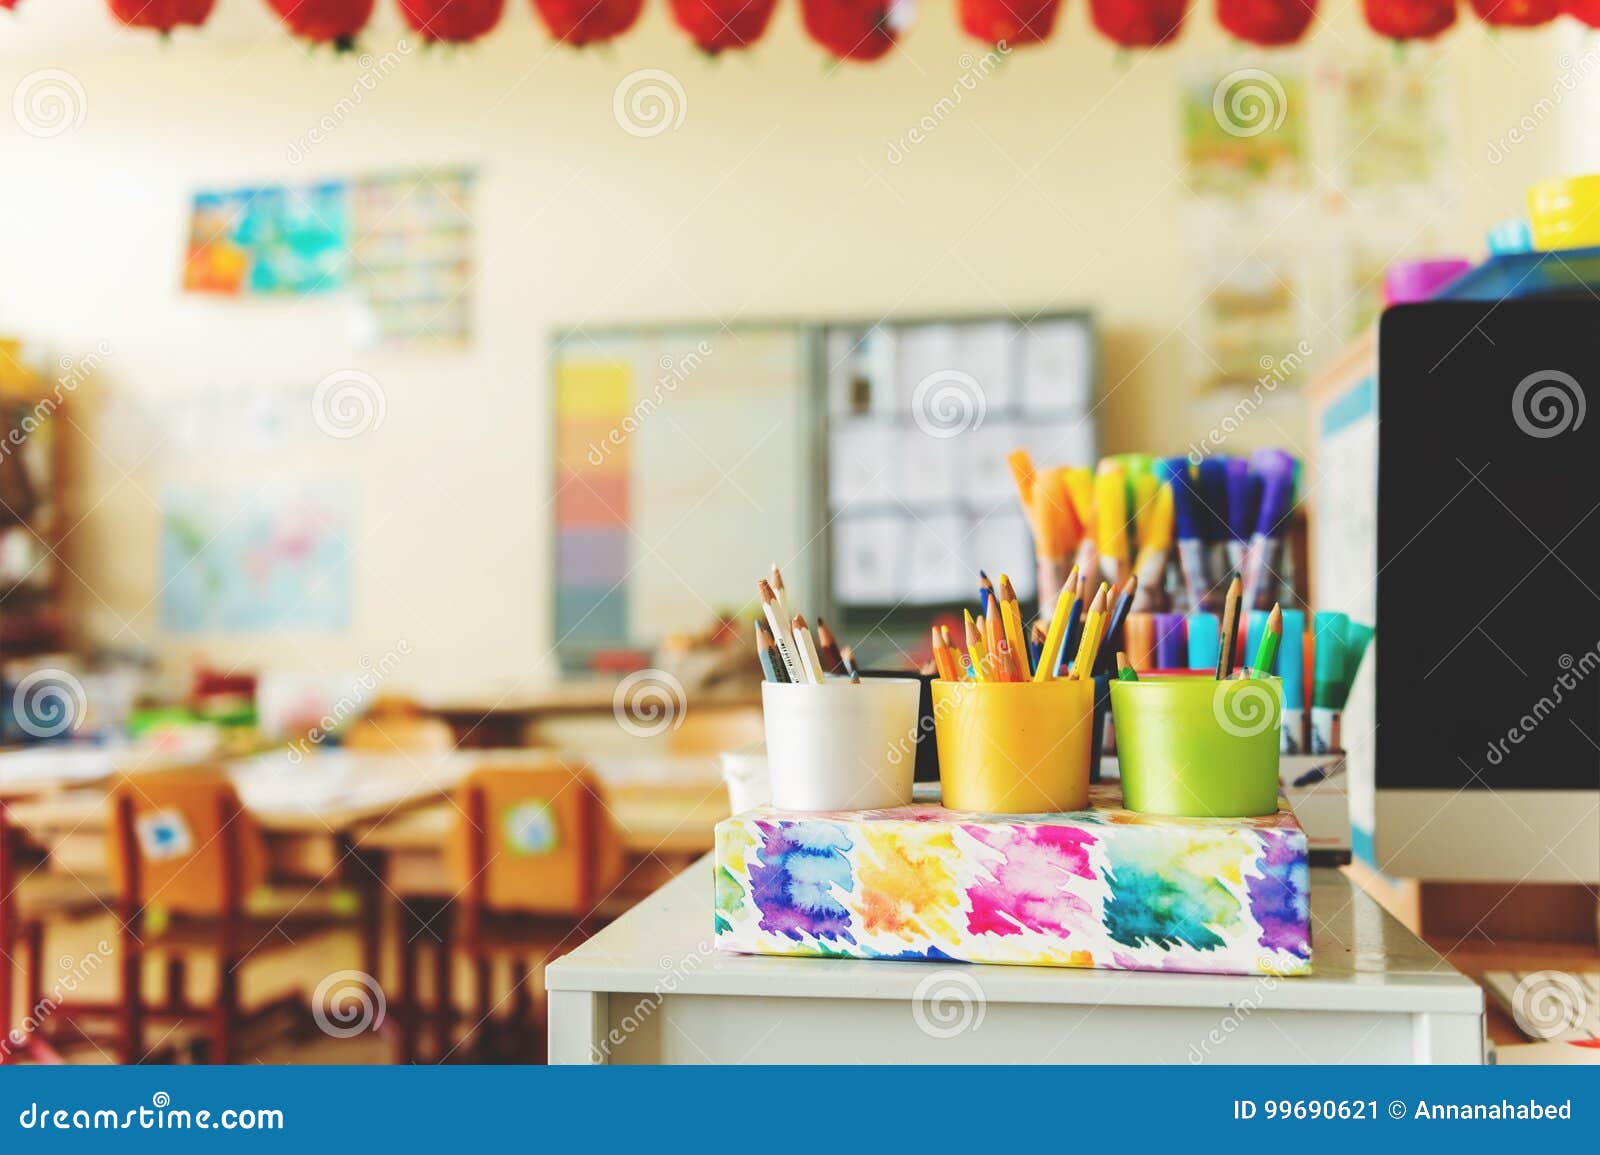 Elementary classroom stock image. Image of modern, exam - 99690621